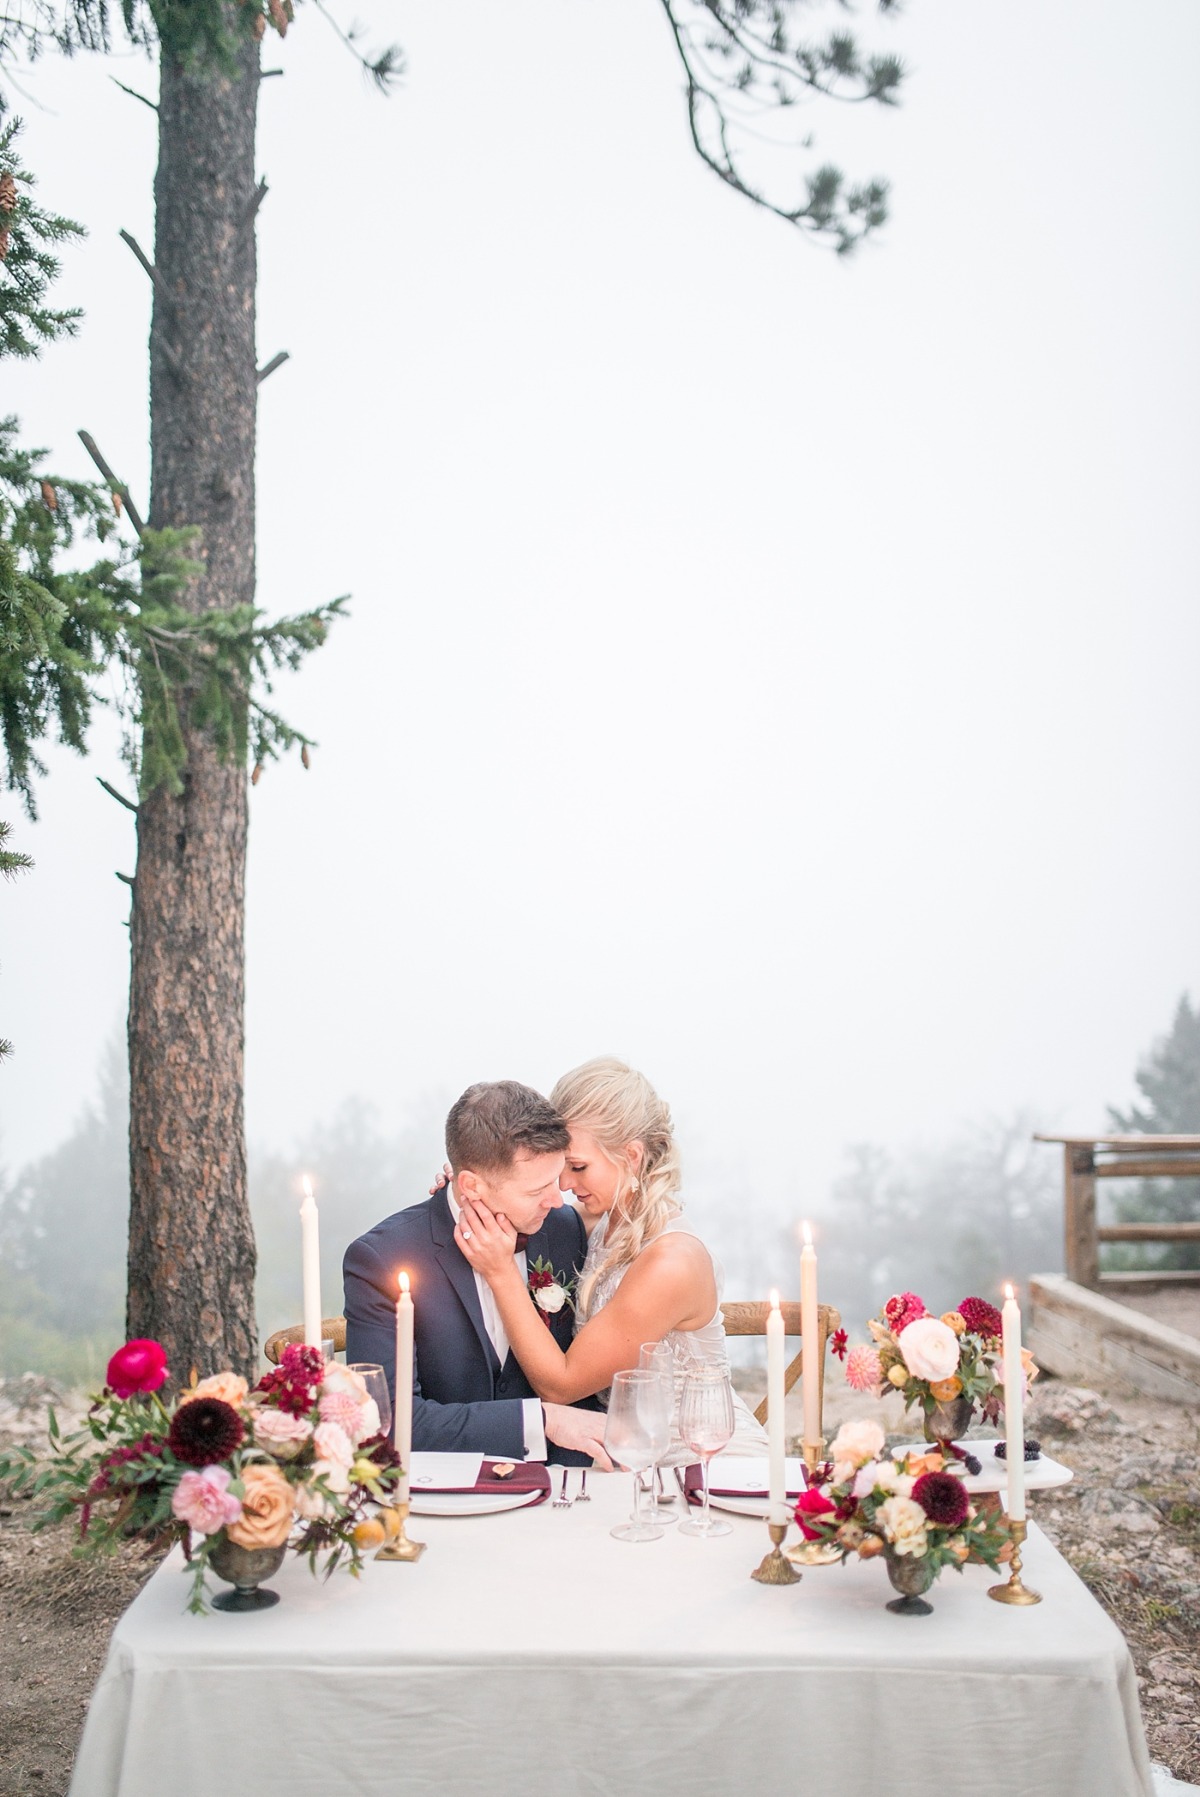 Misty mountain wedding inspiration